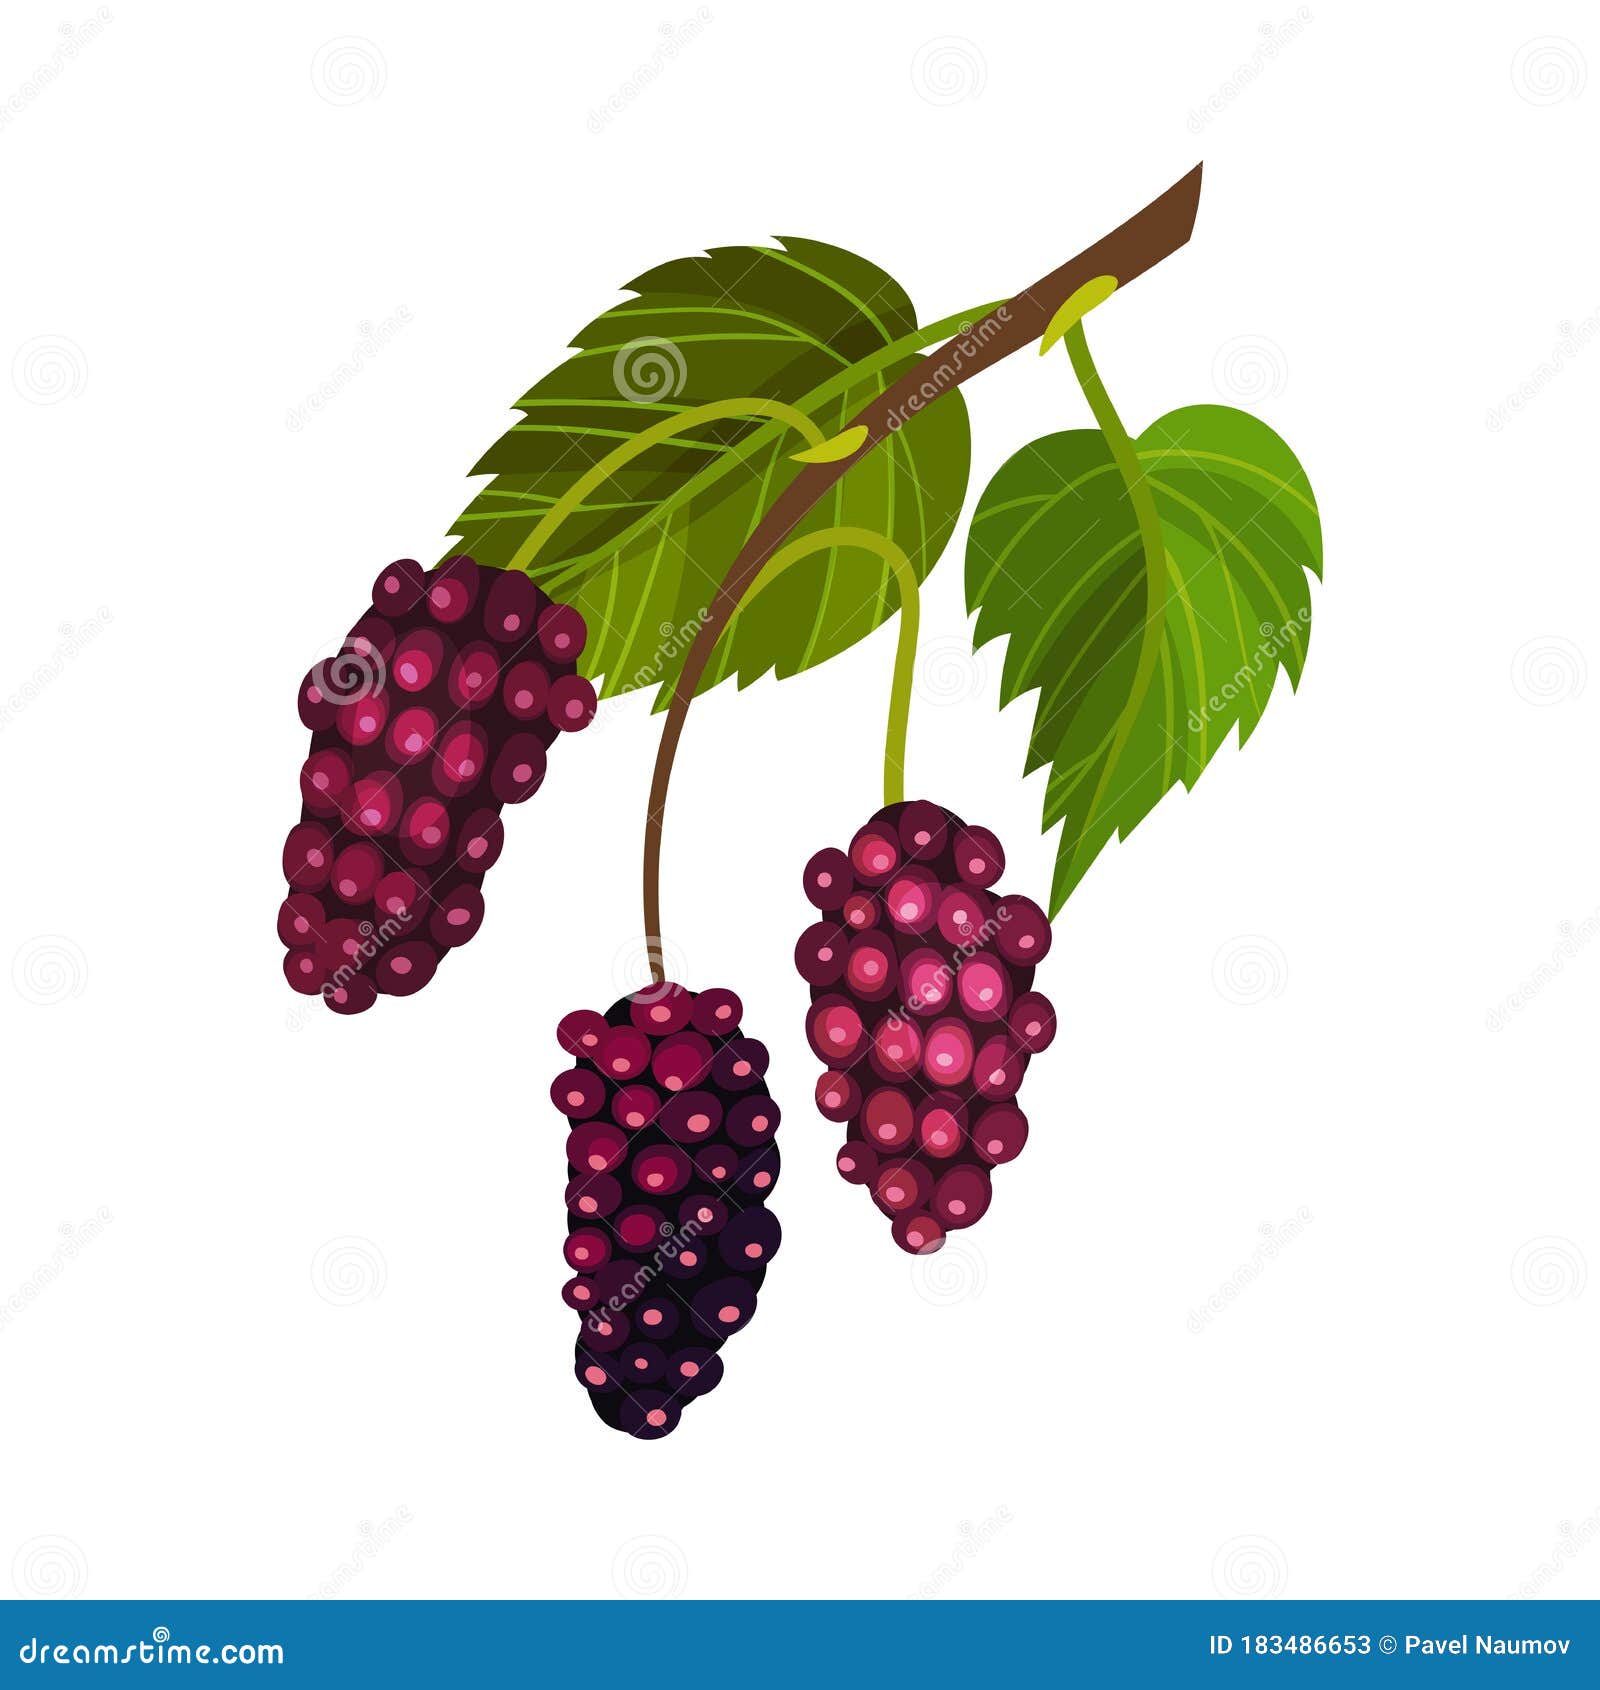 Red Mulberry Fruit Hanging on Tree Branch Resembling Blackberry Vector Illustration Stock Vector - Illustration of fresh, 183486653